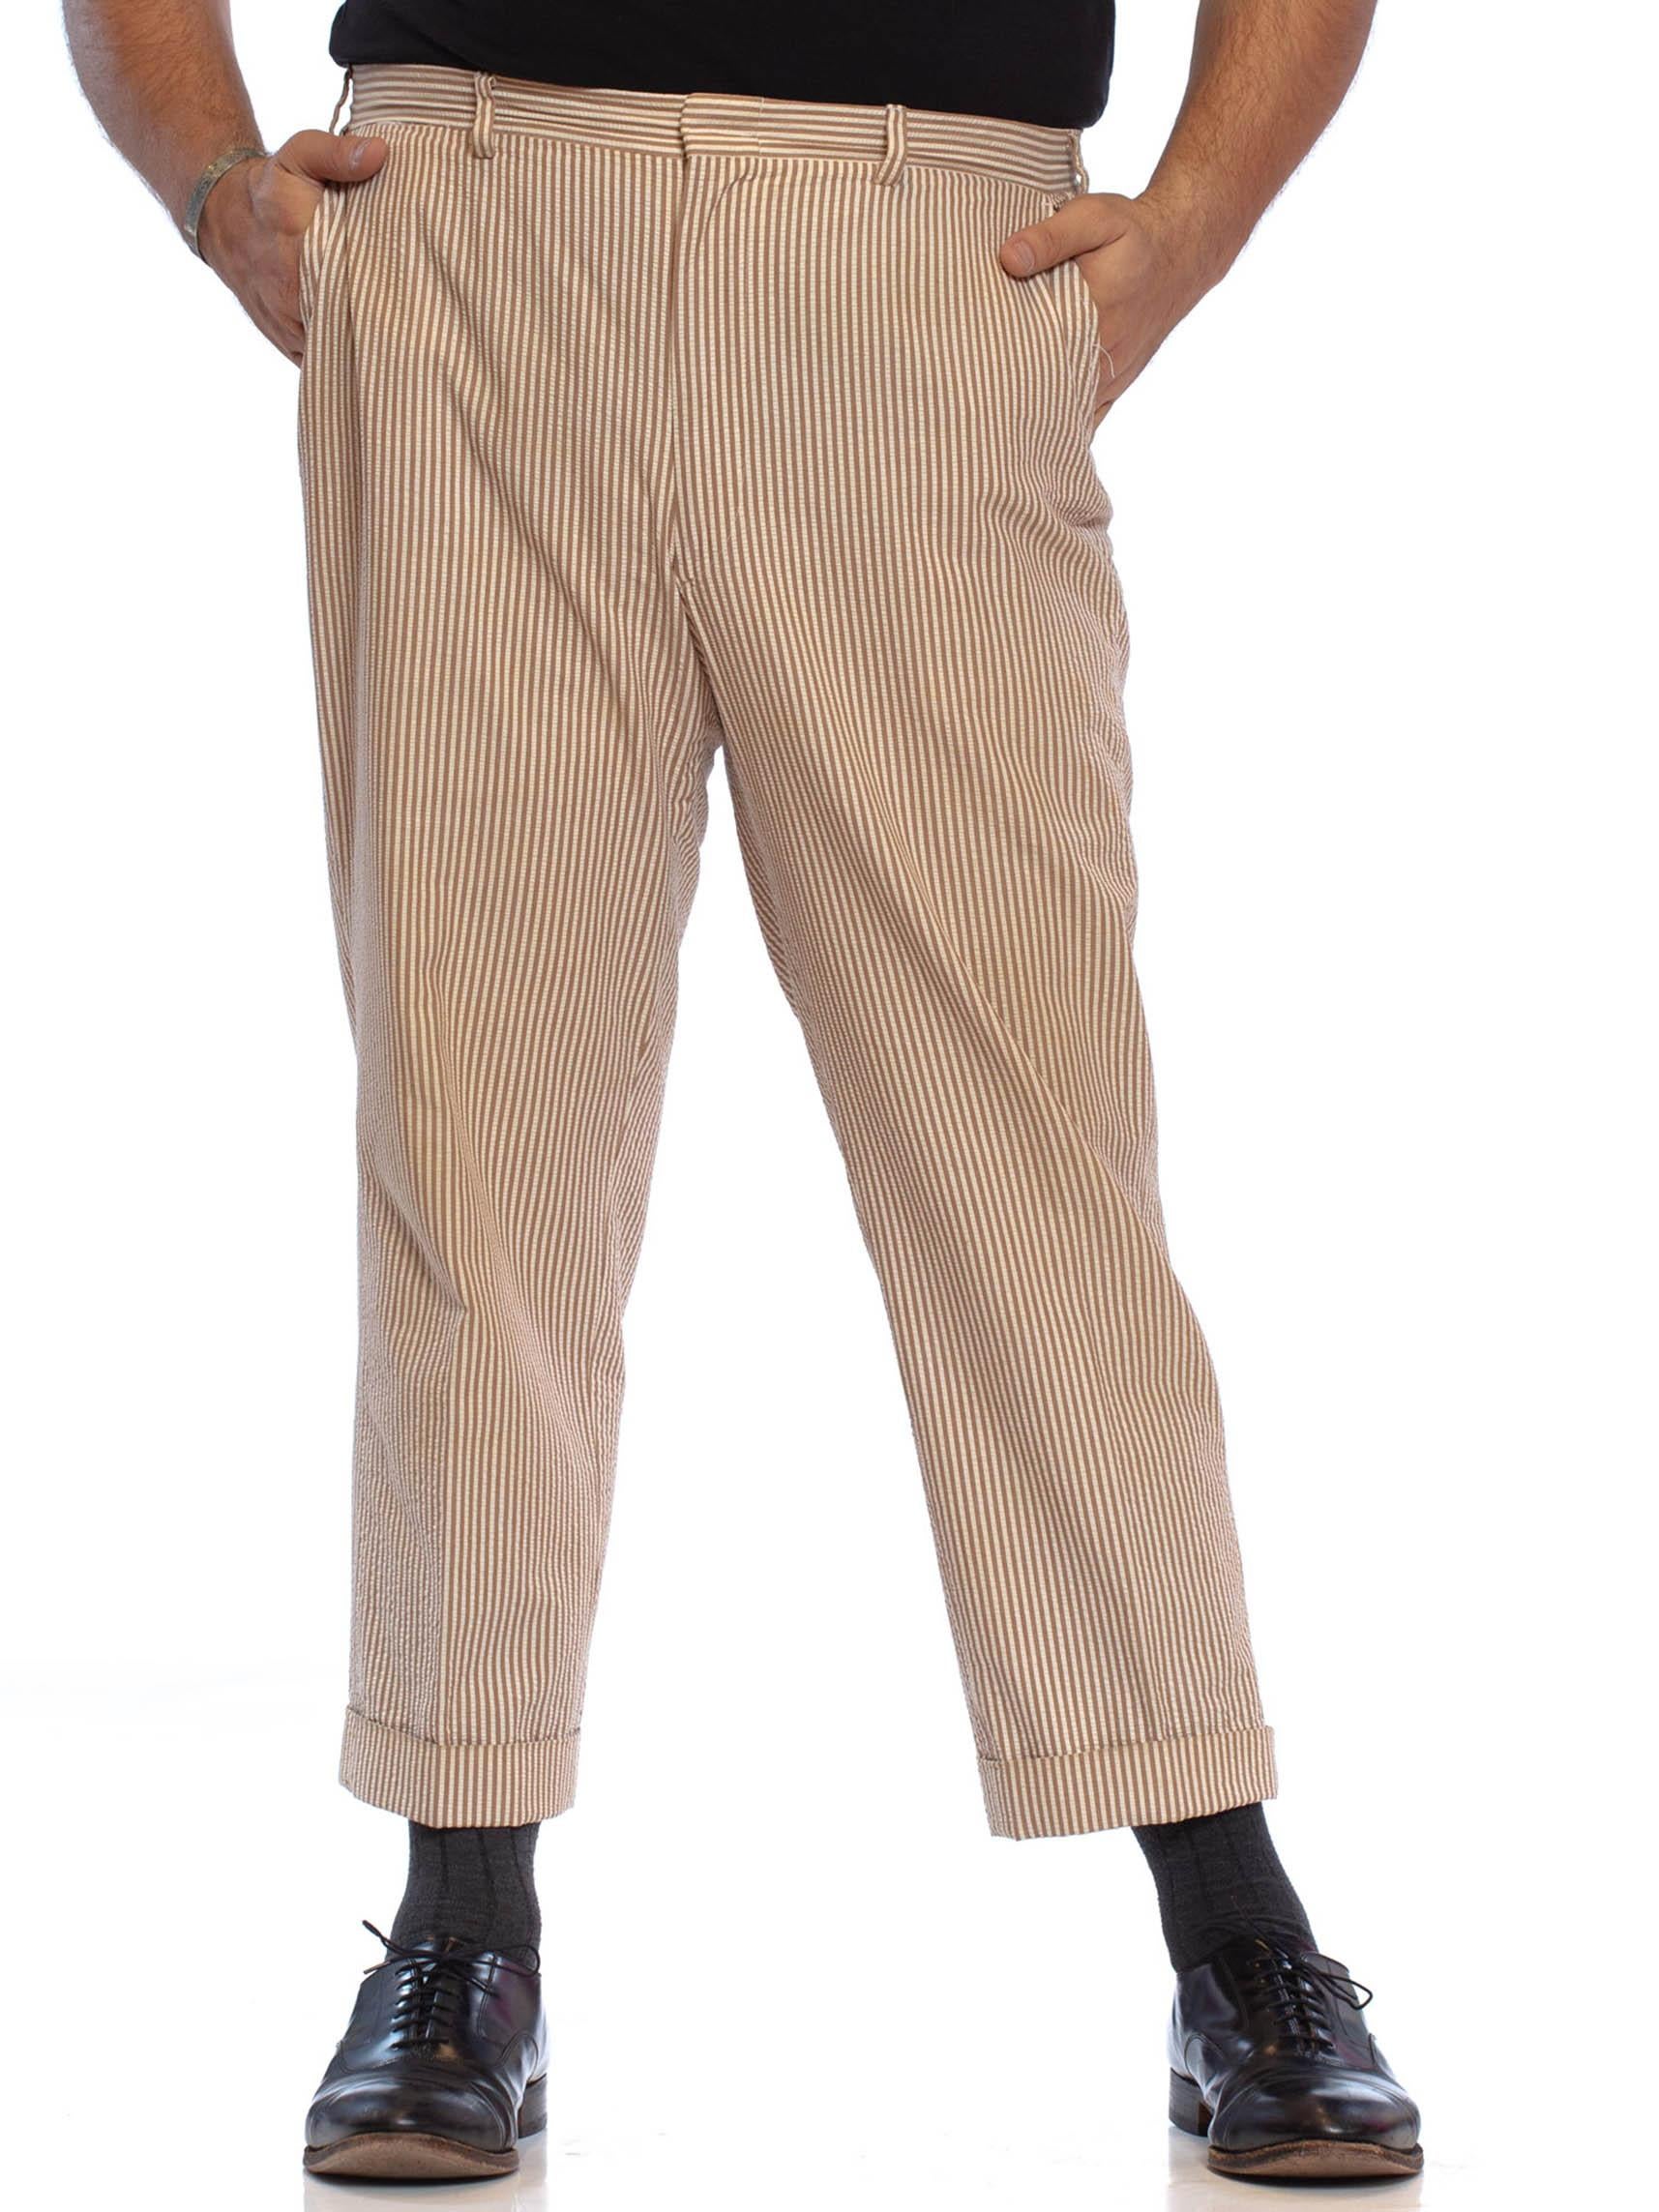 1970s mens pants